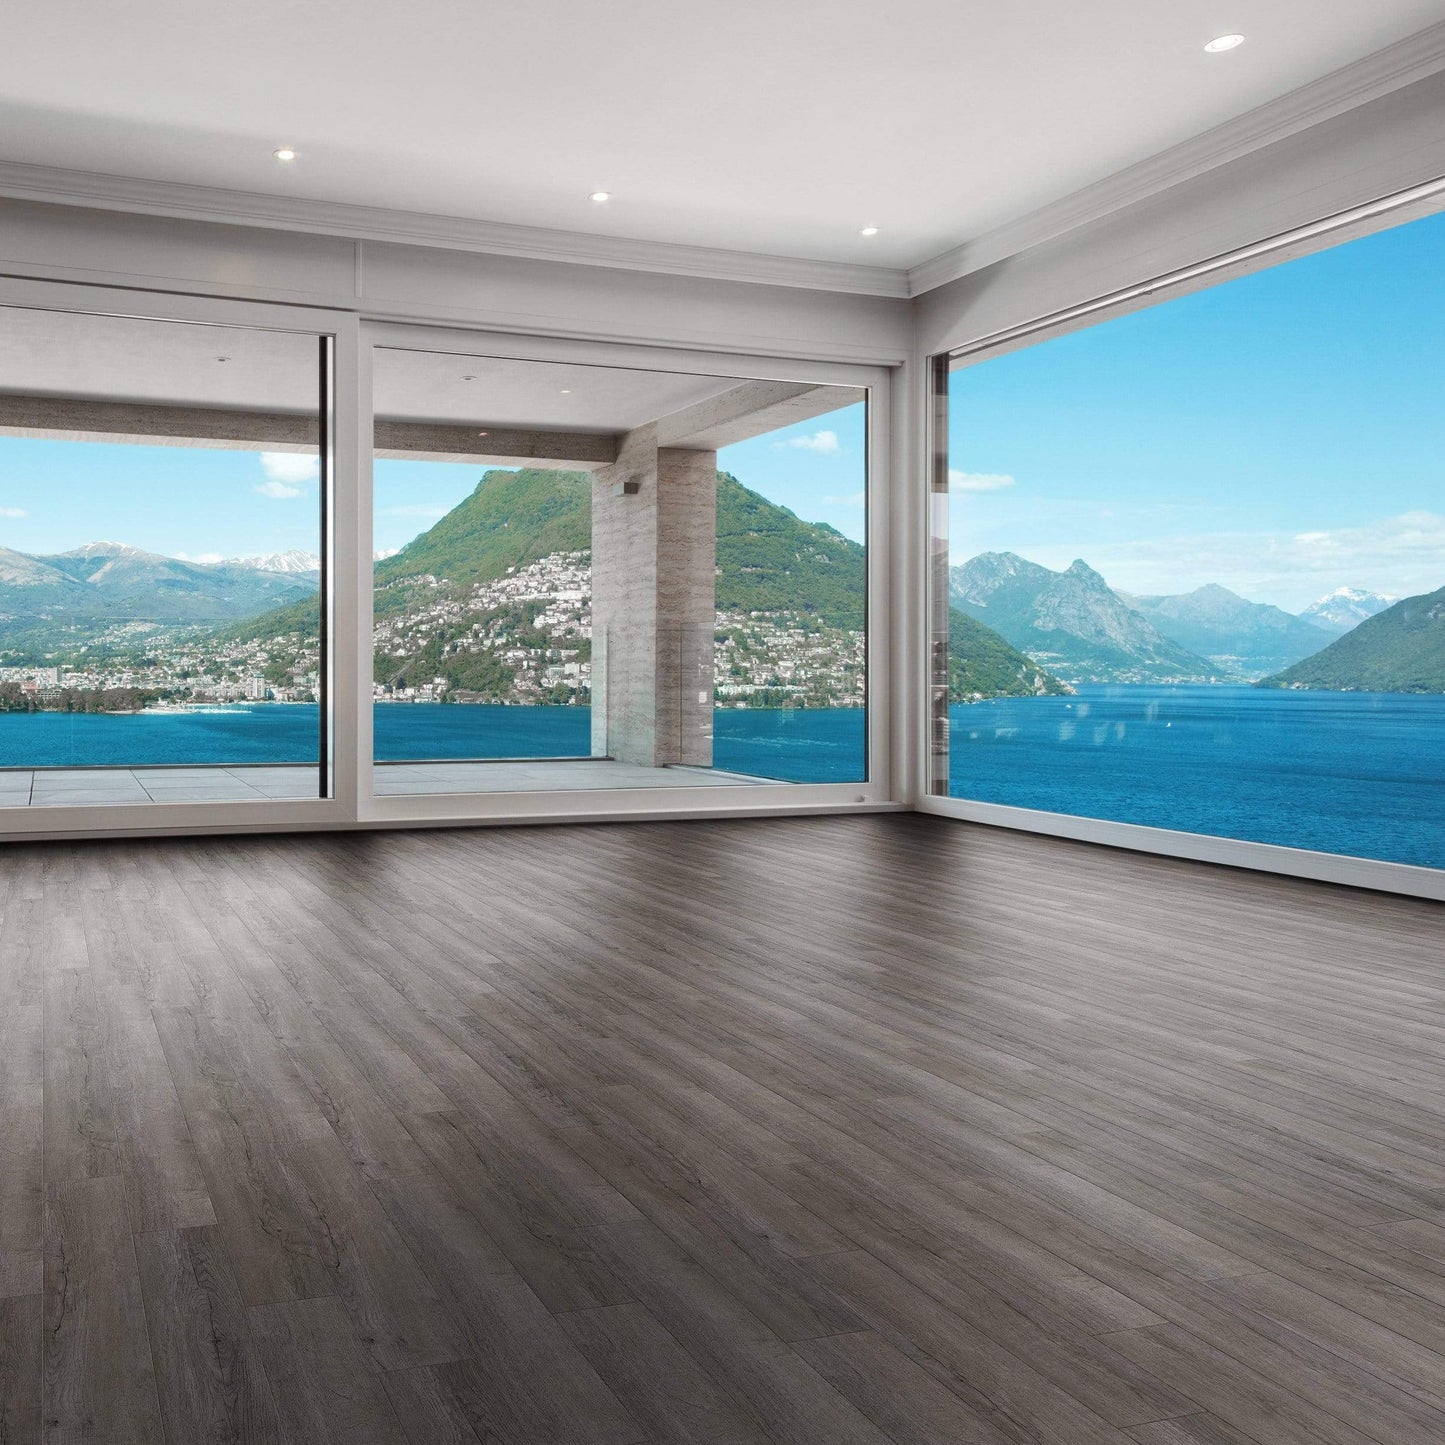 Flooring & Carpet  -  Luvanto Click Smoke Charcoal Flooring 2.2M  -  50155760